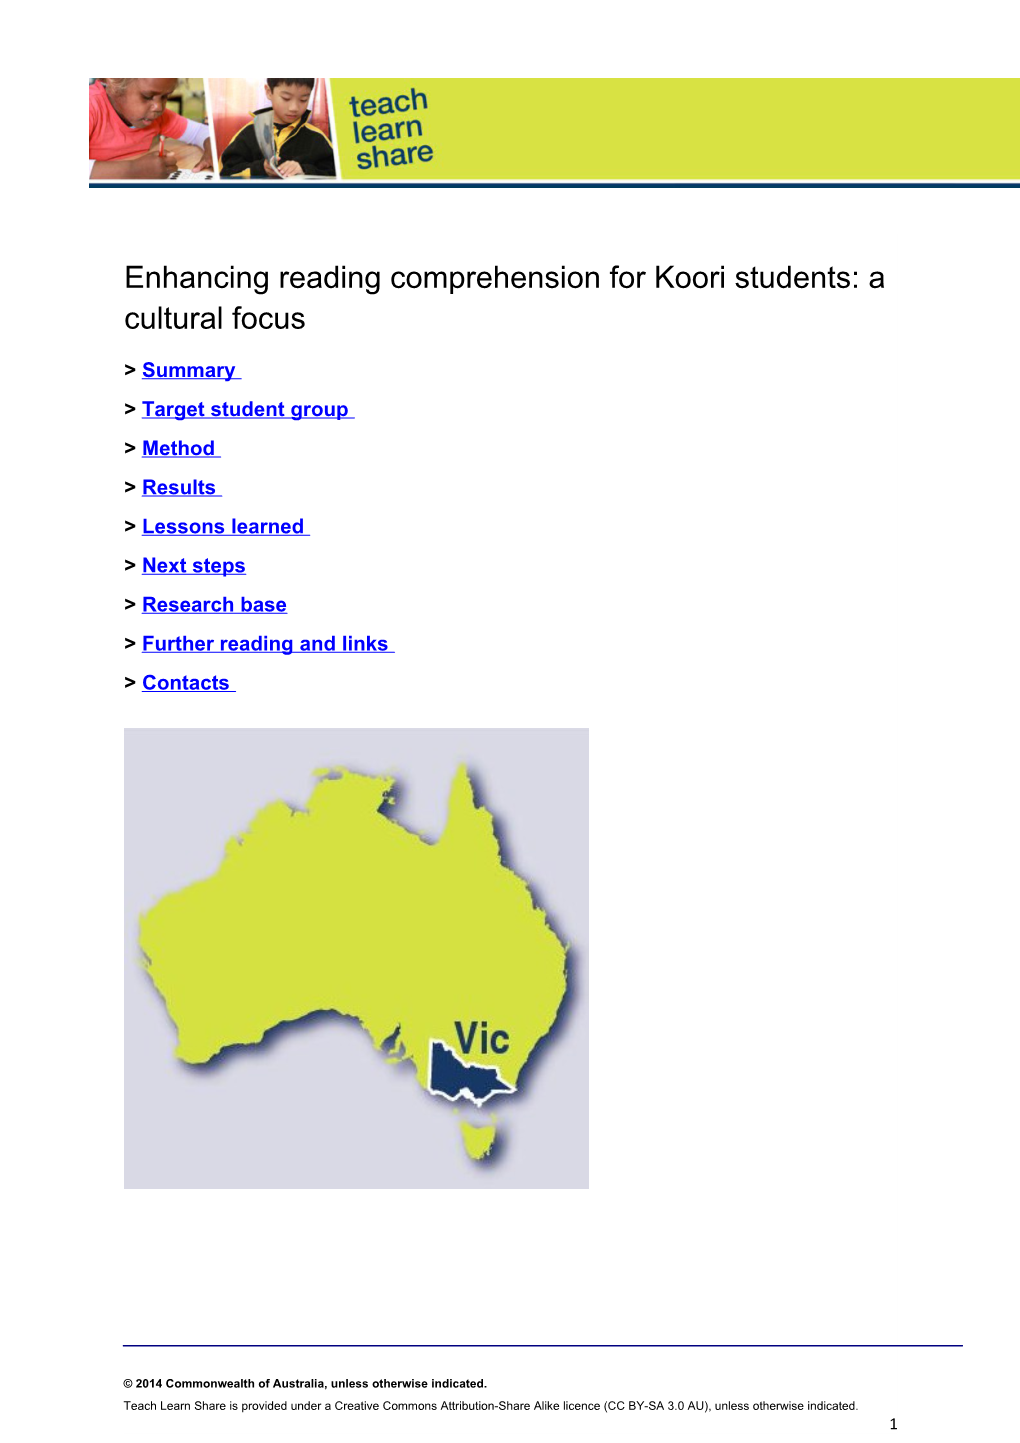 Enhancing Reading Comprehension for Koori Students: a Cultural Focus